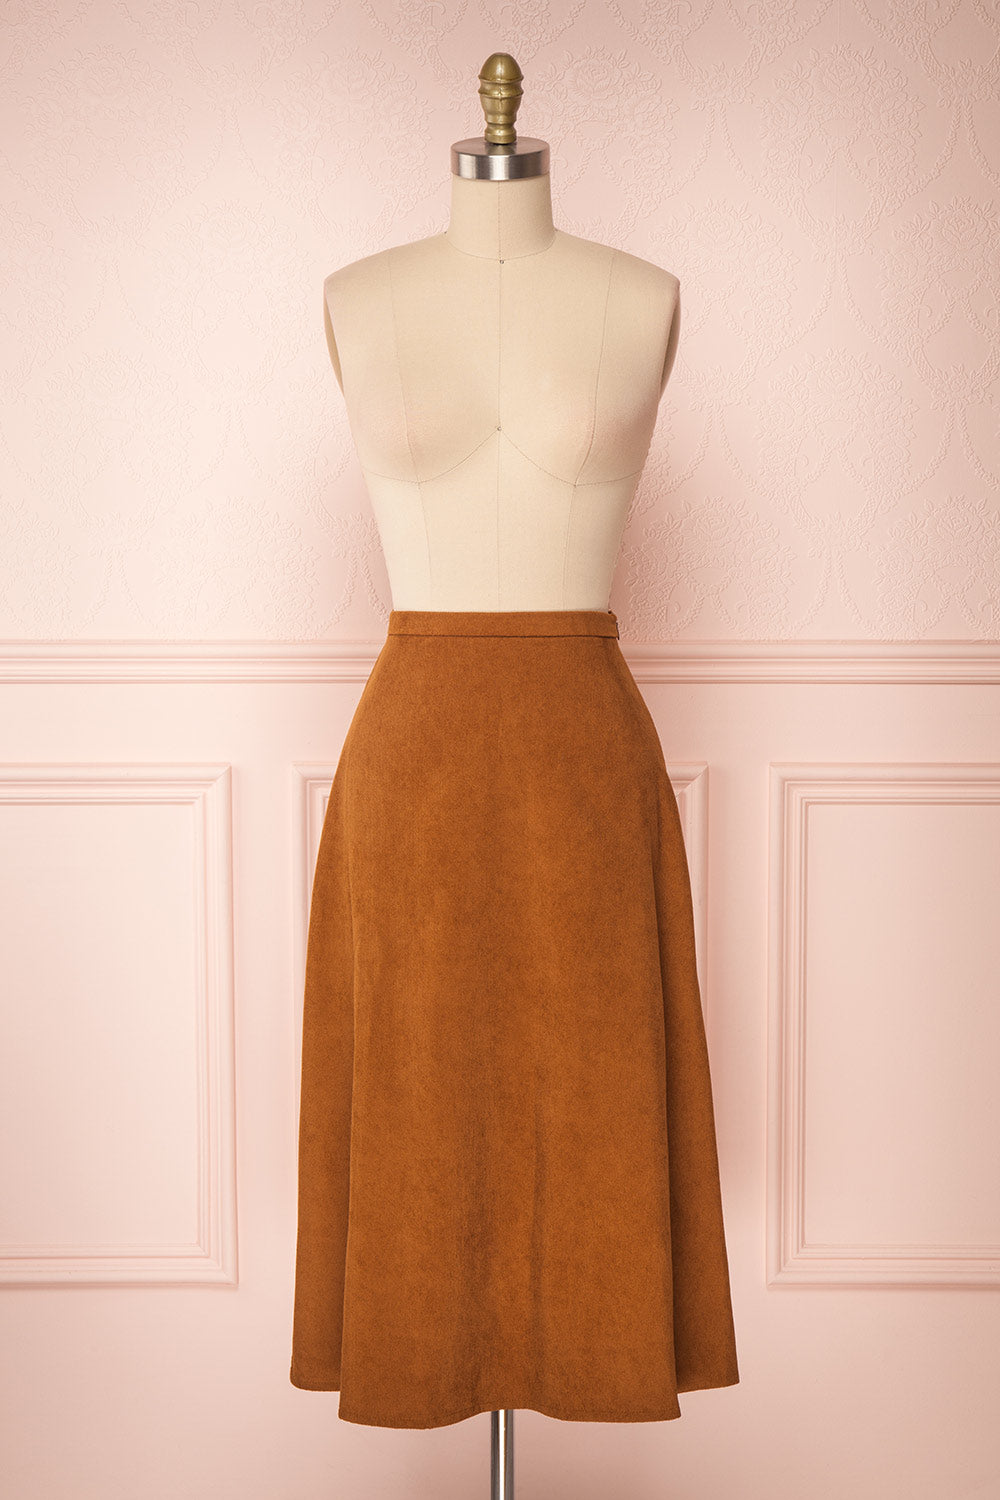 Colditz Brown Corduroy A-Line Midi Skirt | Boutique 1861 front view 